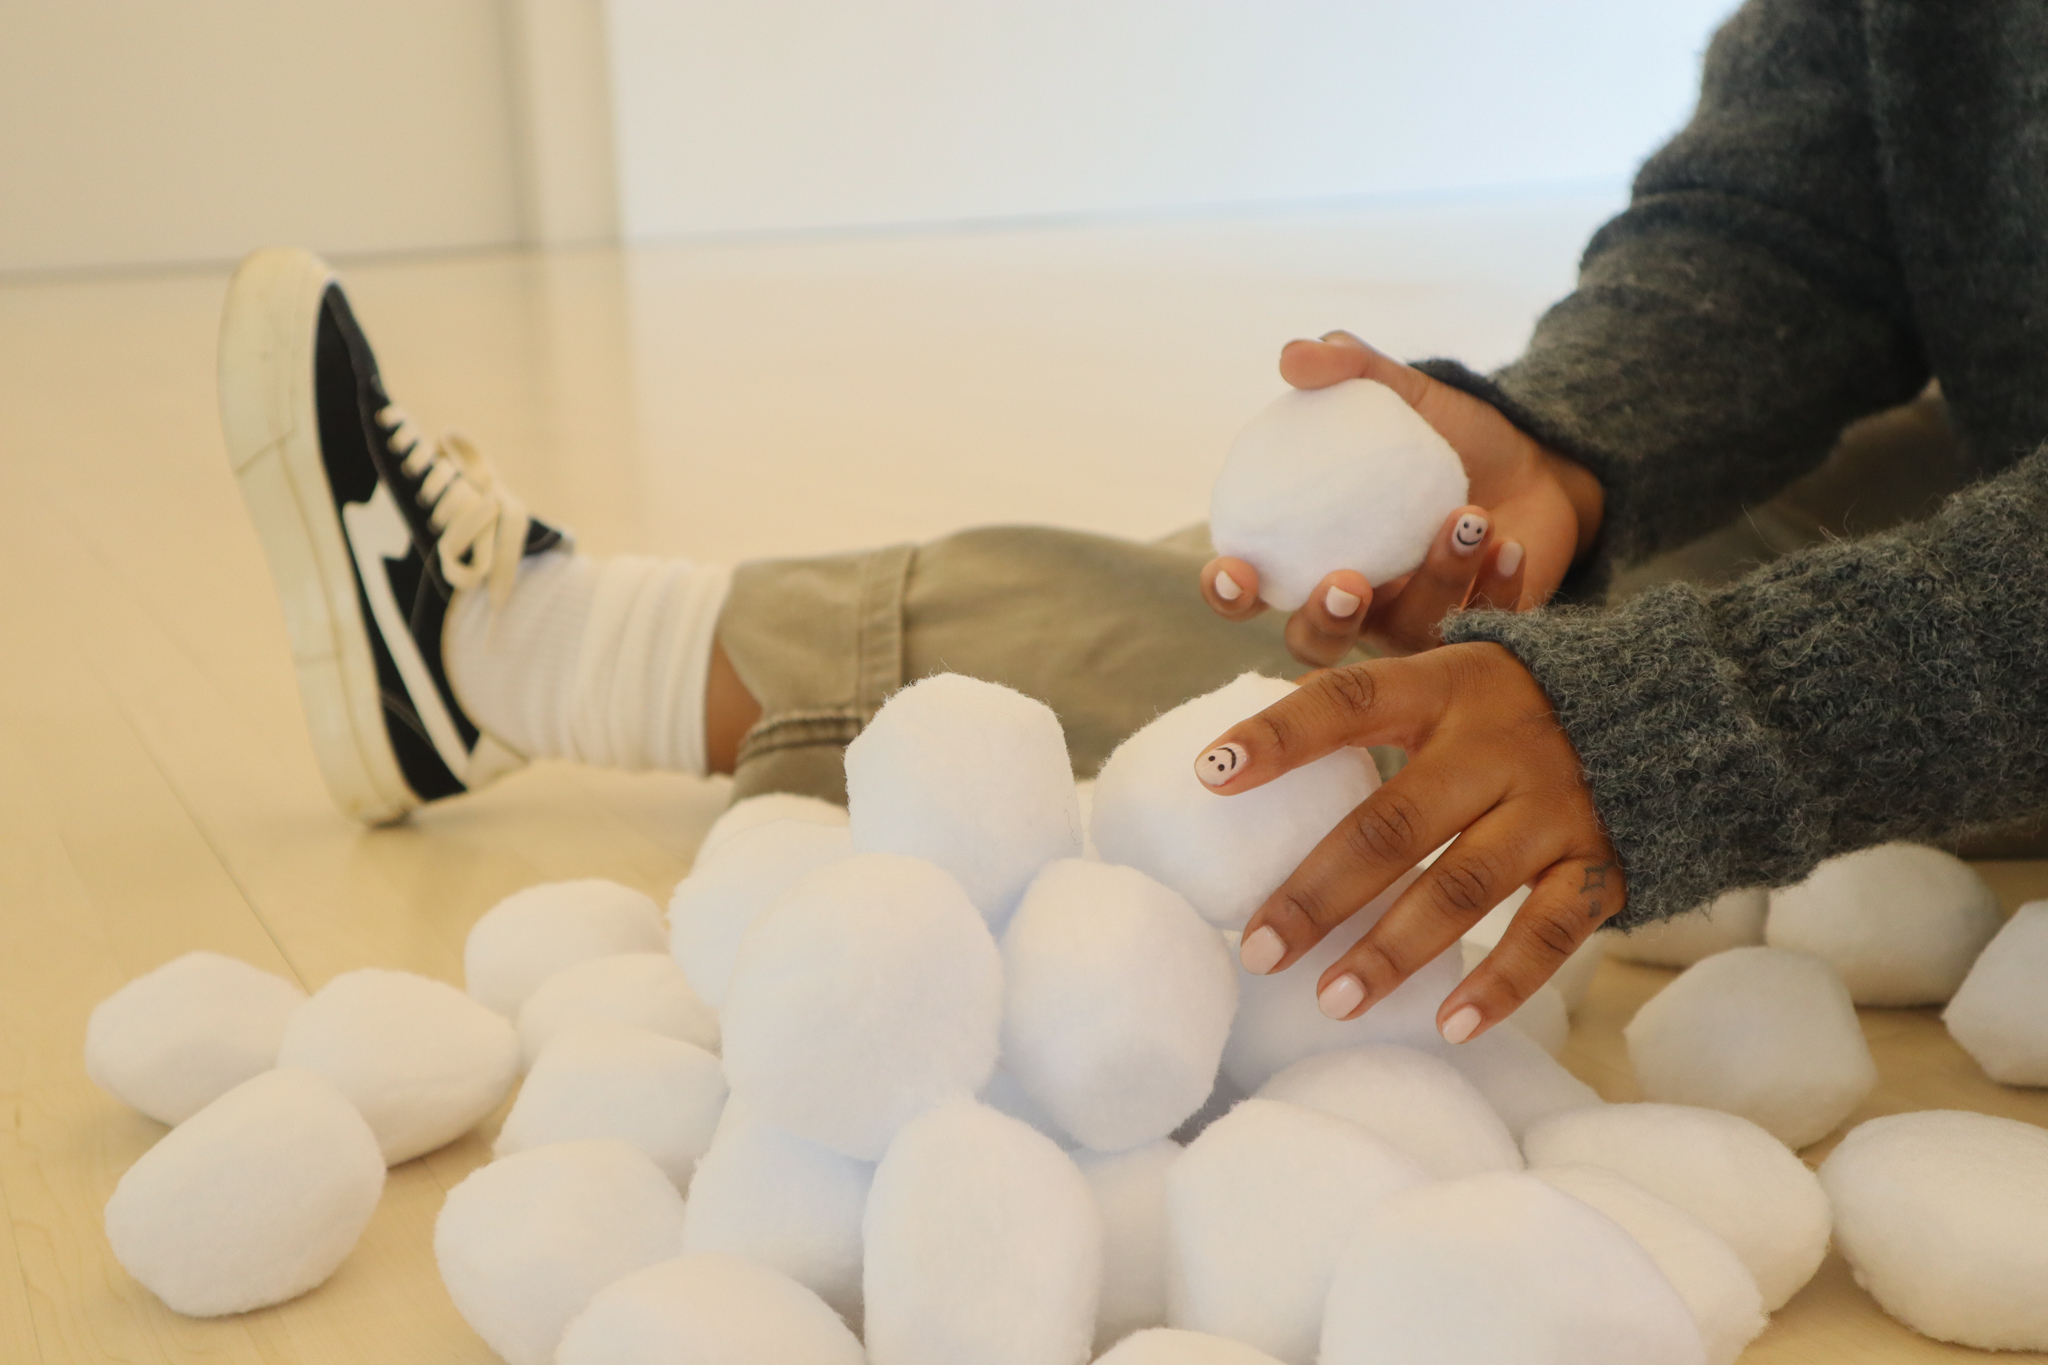 Hands grab for cotton snow balls